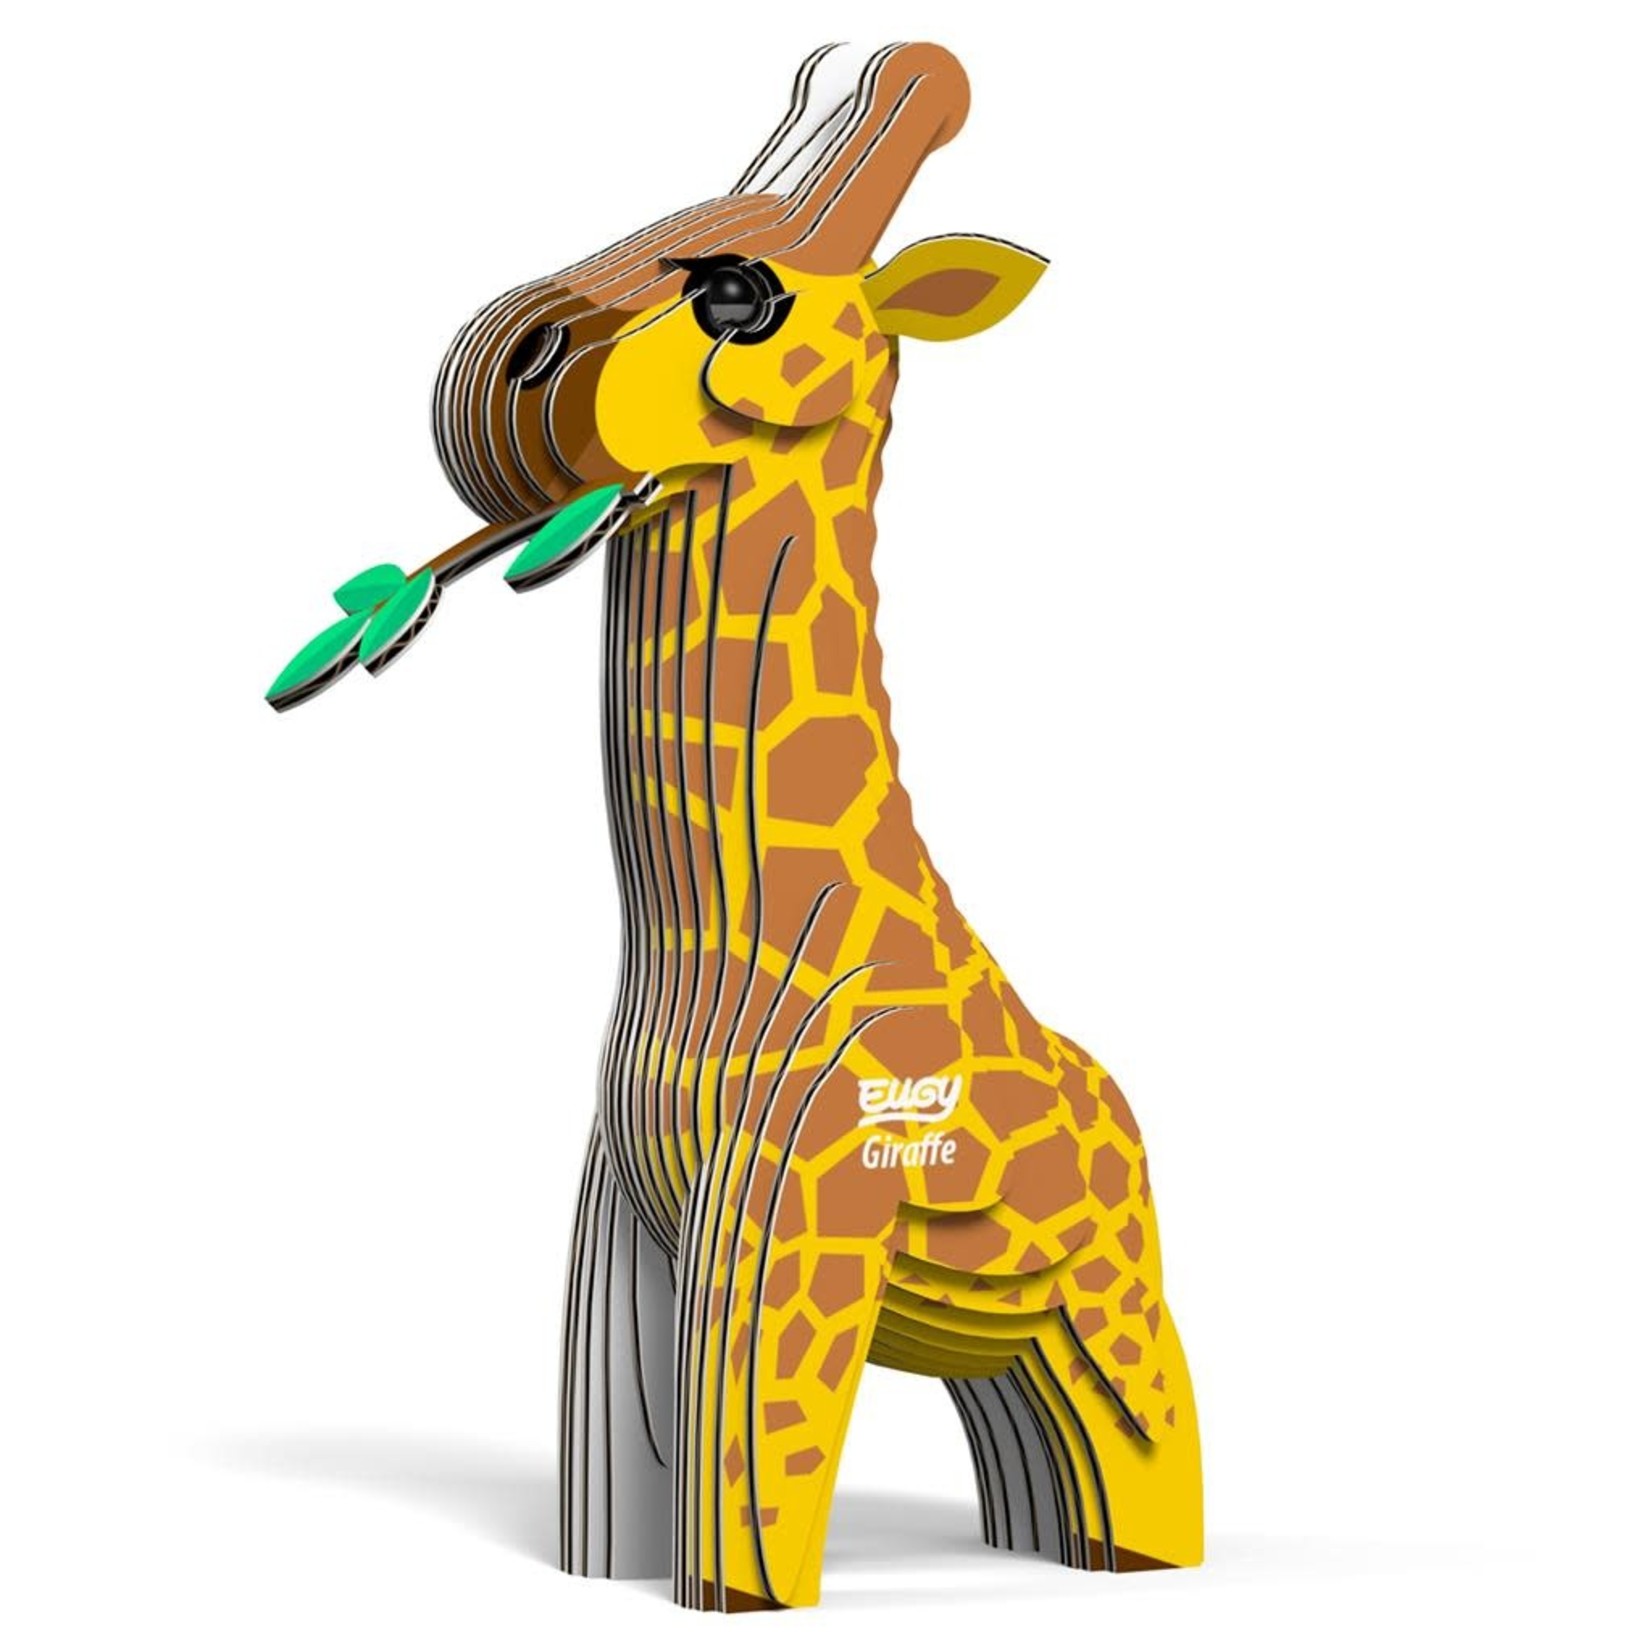 Eugy 3D puzzel - Giraf